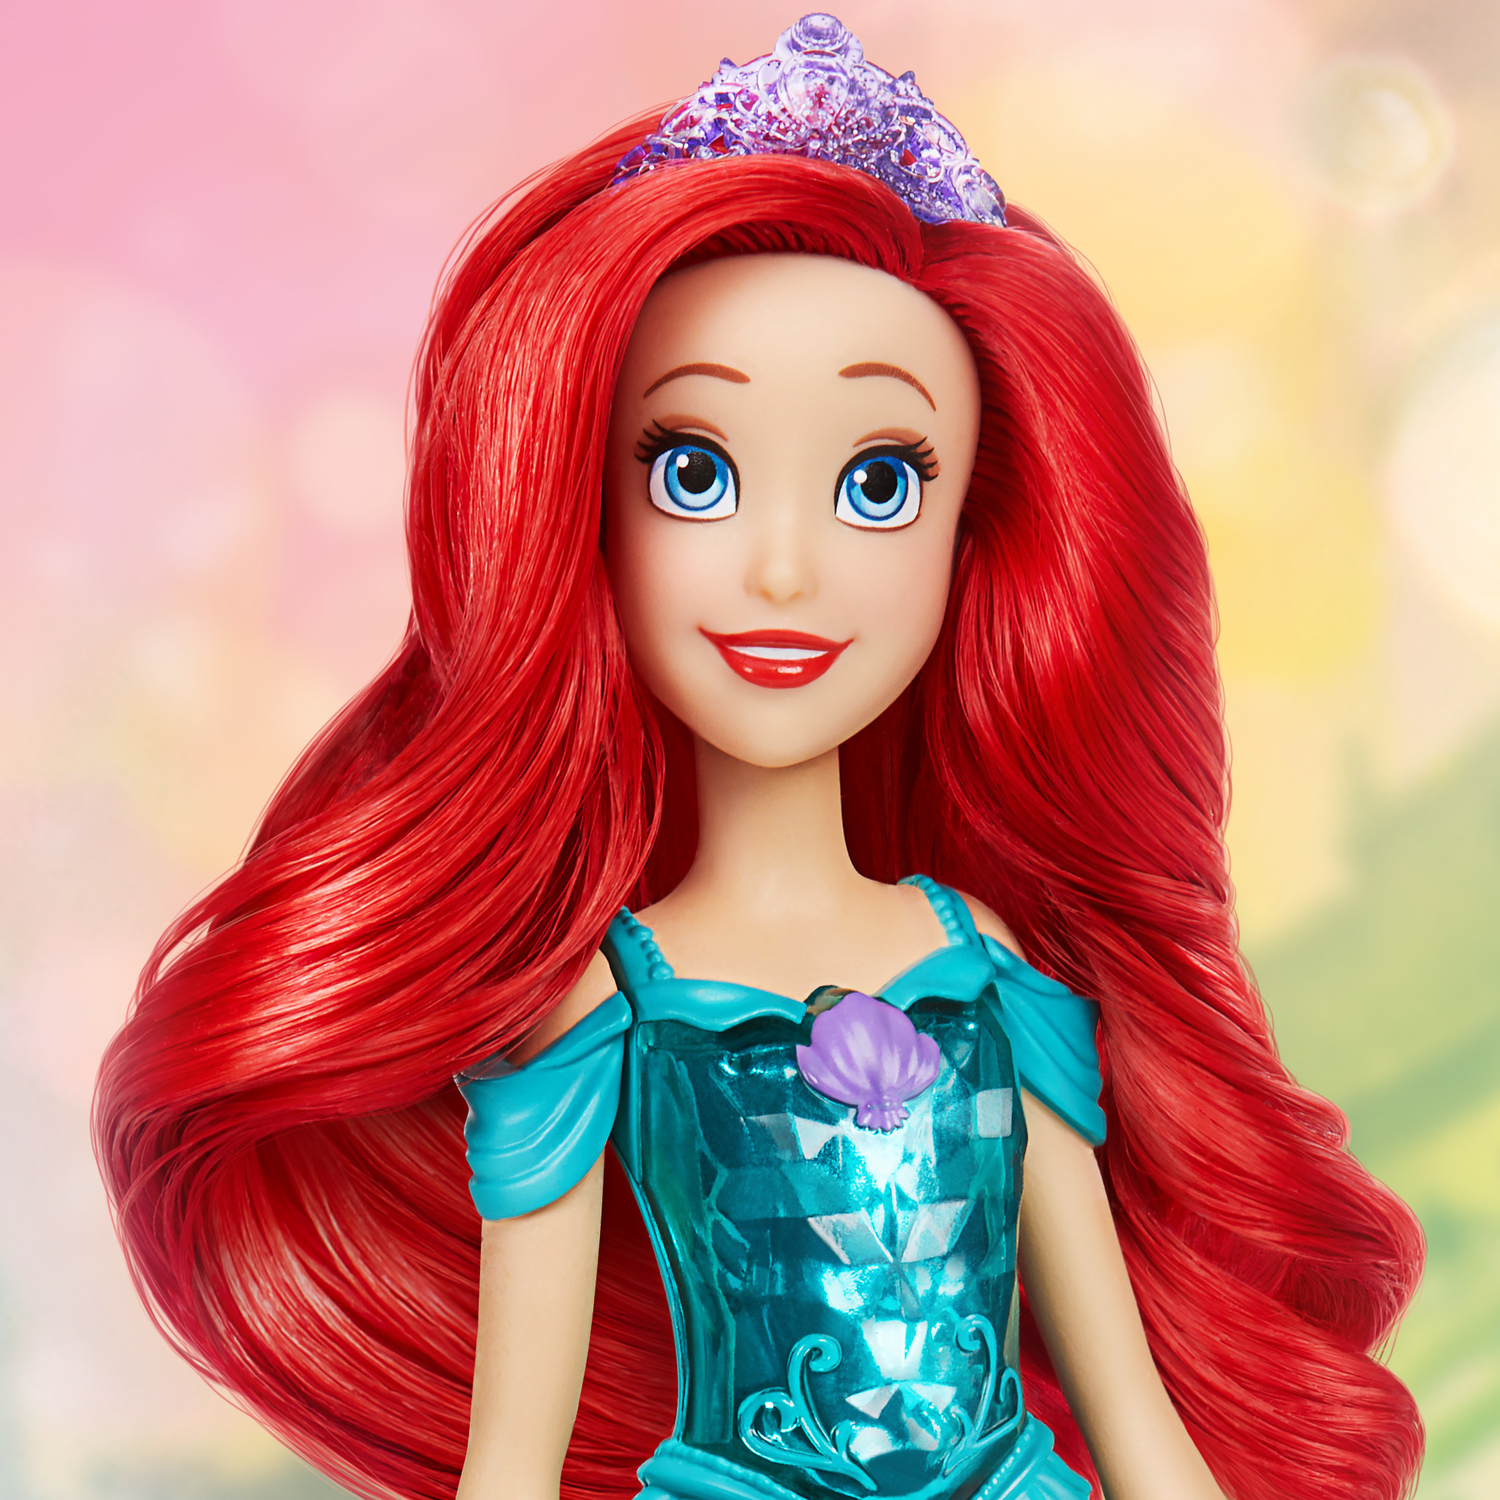 Disney Princess doll - F08955X6